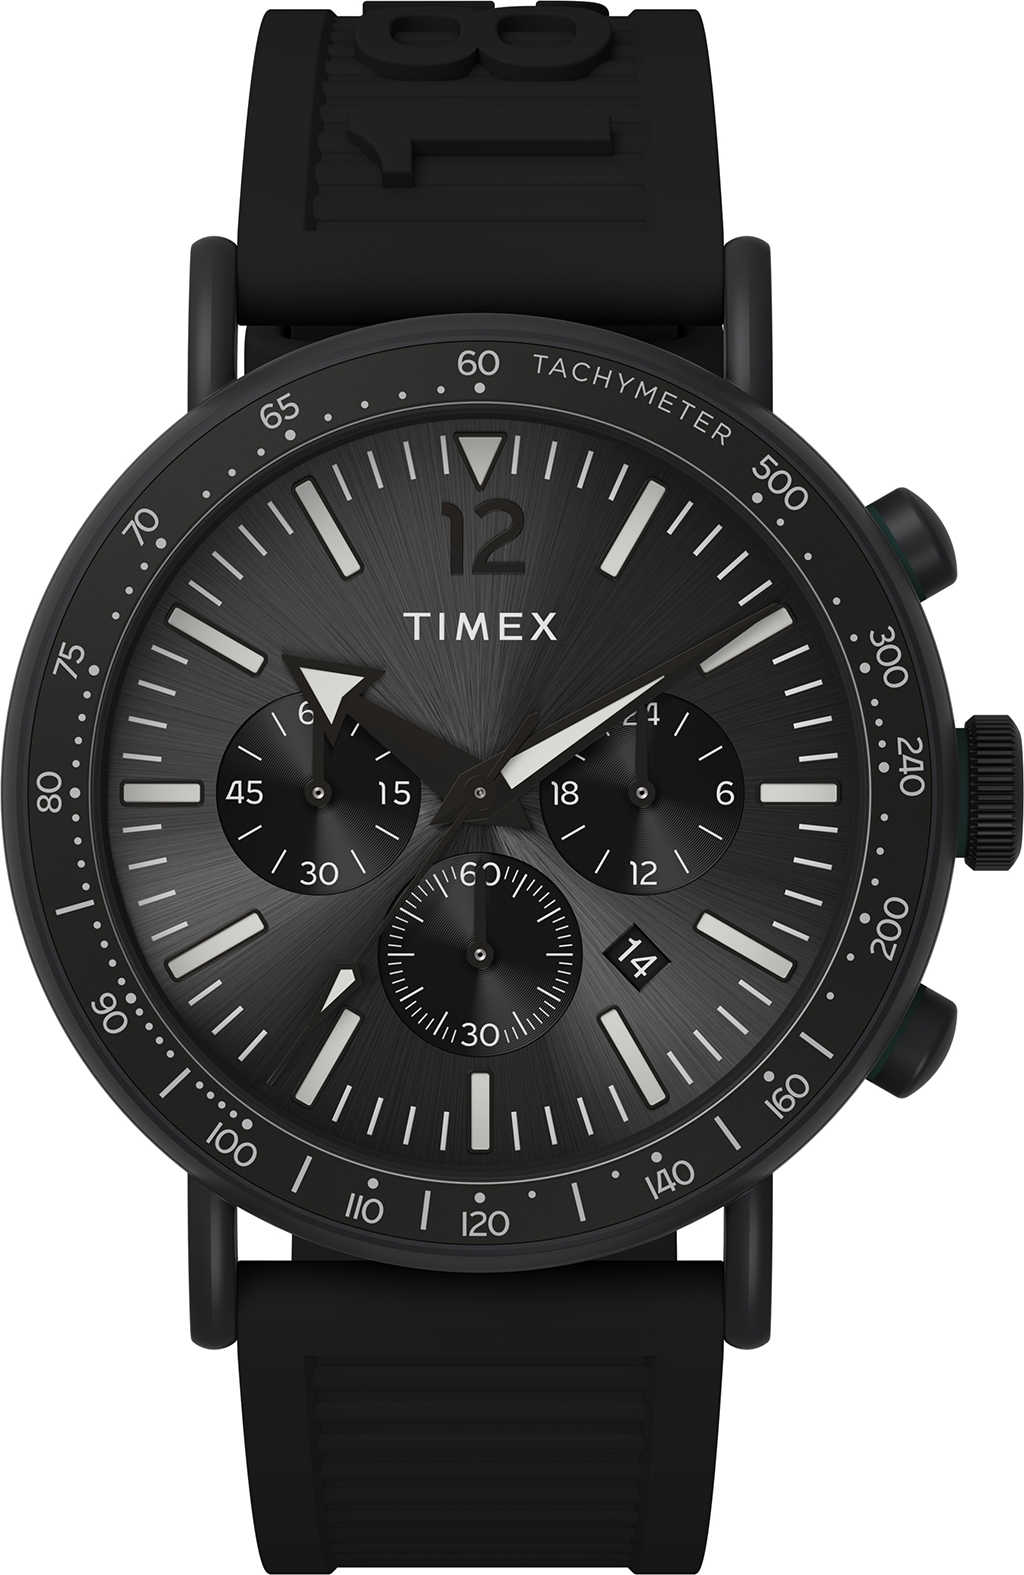 TIMEX Waterbury Standard Tachymeter Chronograph lifestyle